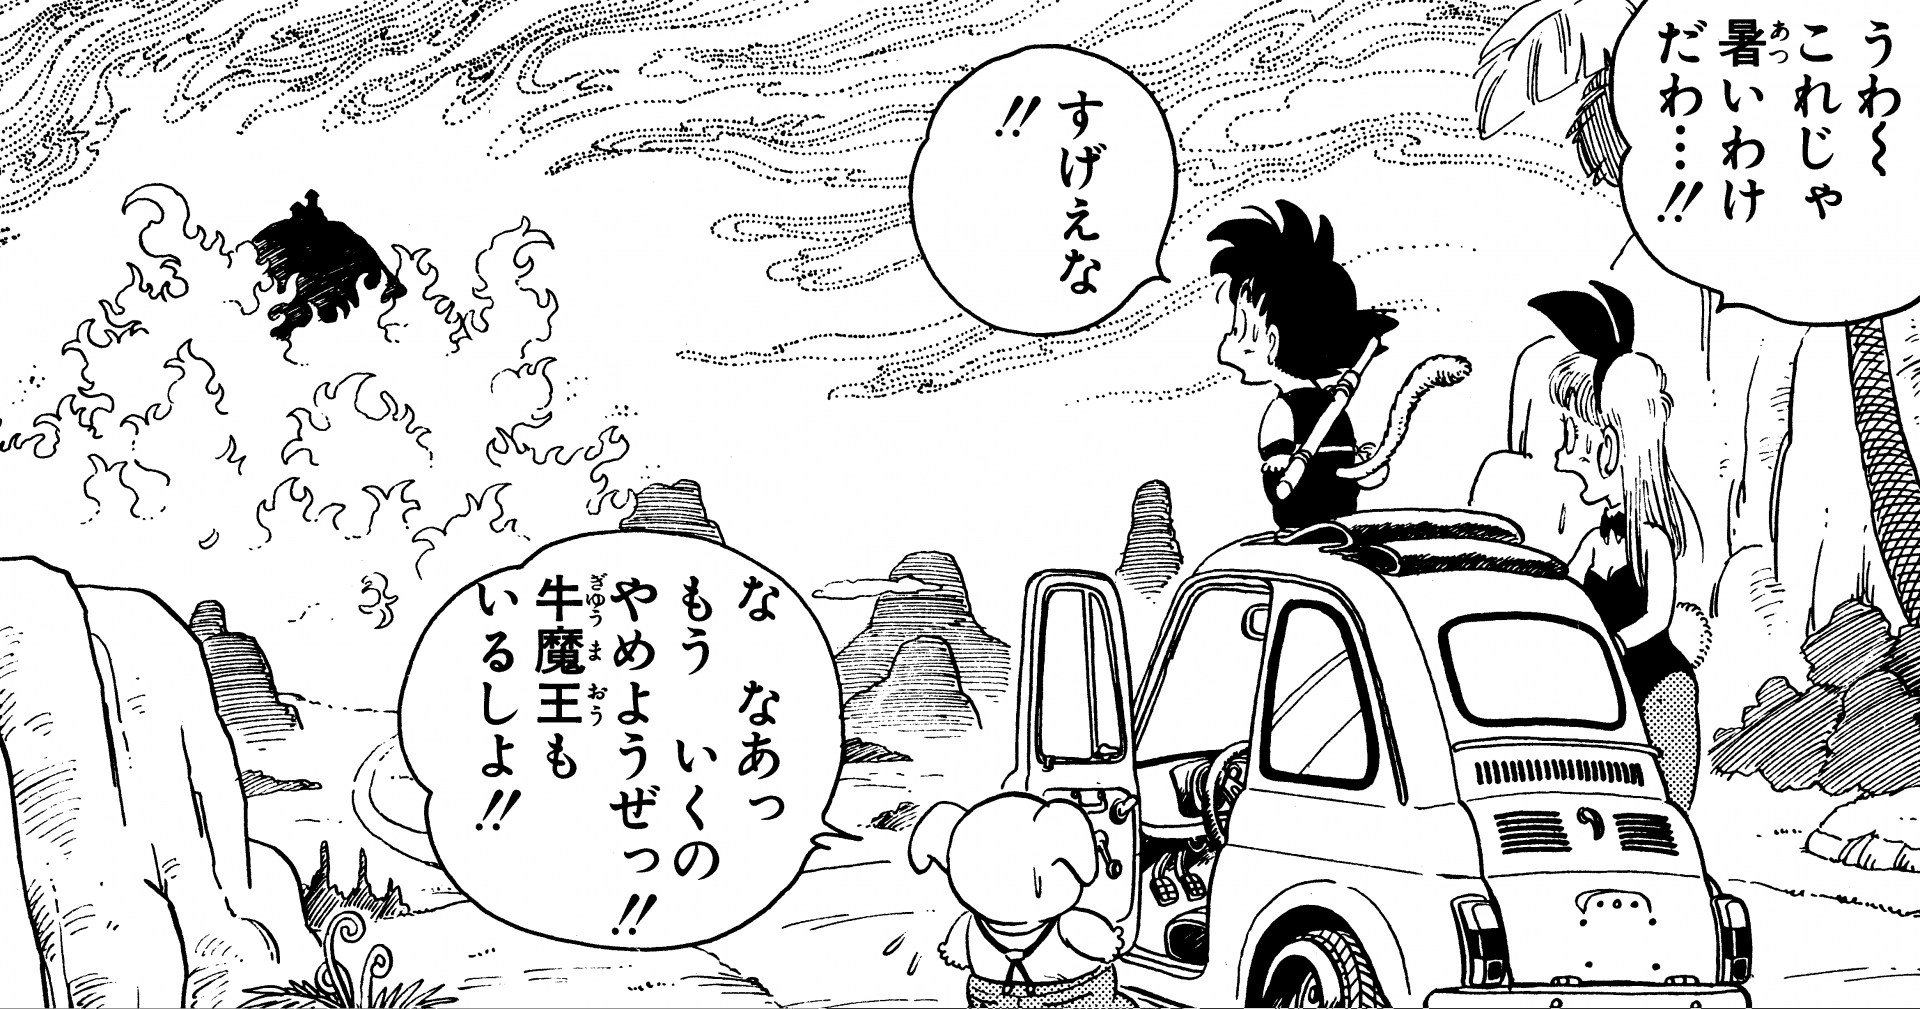 〜 Investigación en profundidad sobre el manga de Dragon Ball: Archivo # 017 Diario de viaje mundial: Fry-pan Mountain